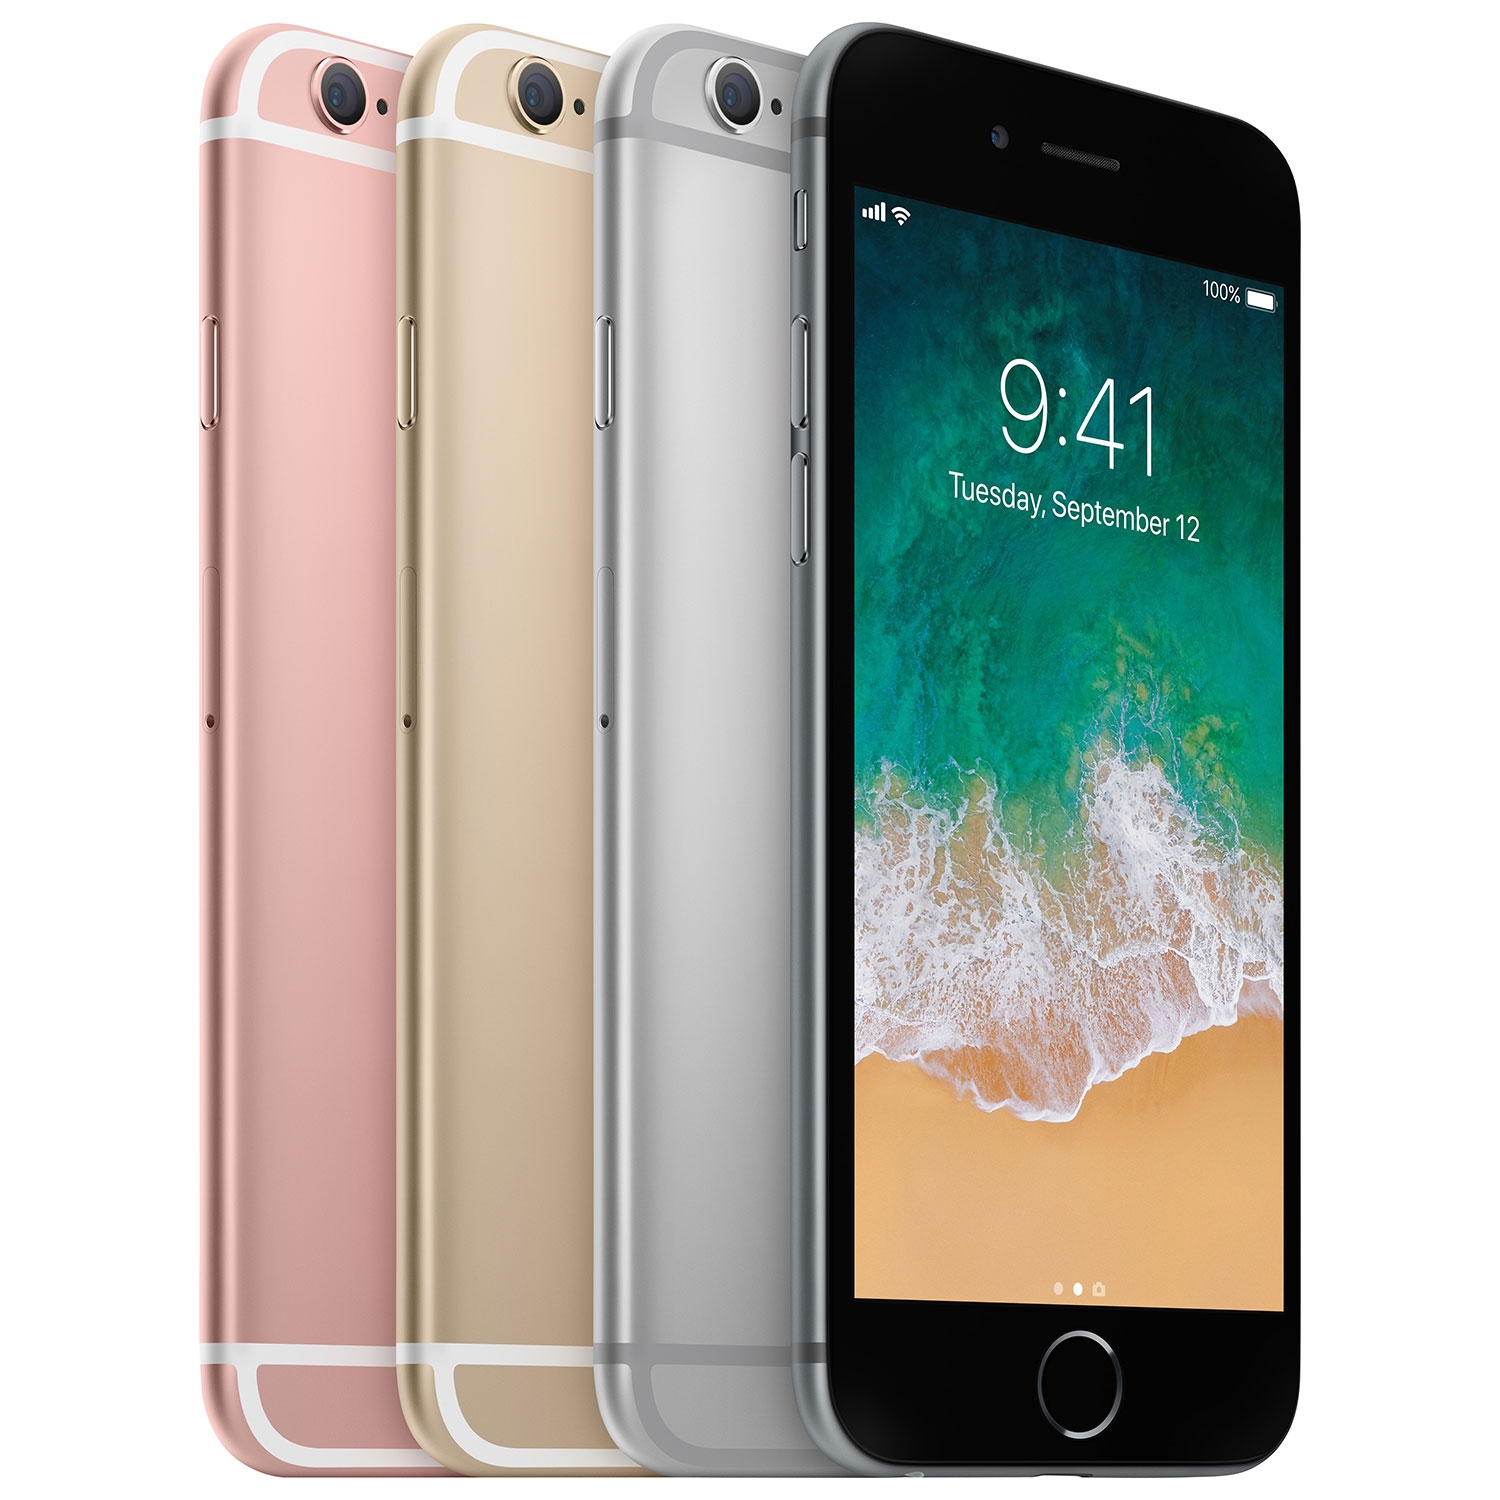 Refurbished (Good) - Apple iPhone 6s 128GB Smartphone - Rose Gold